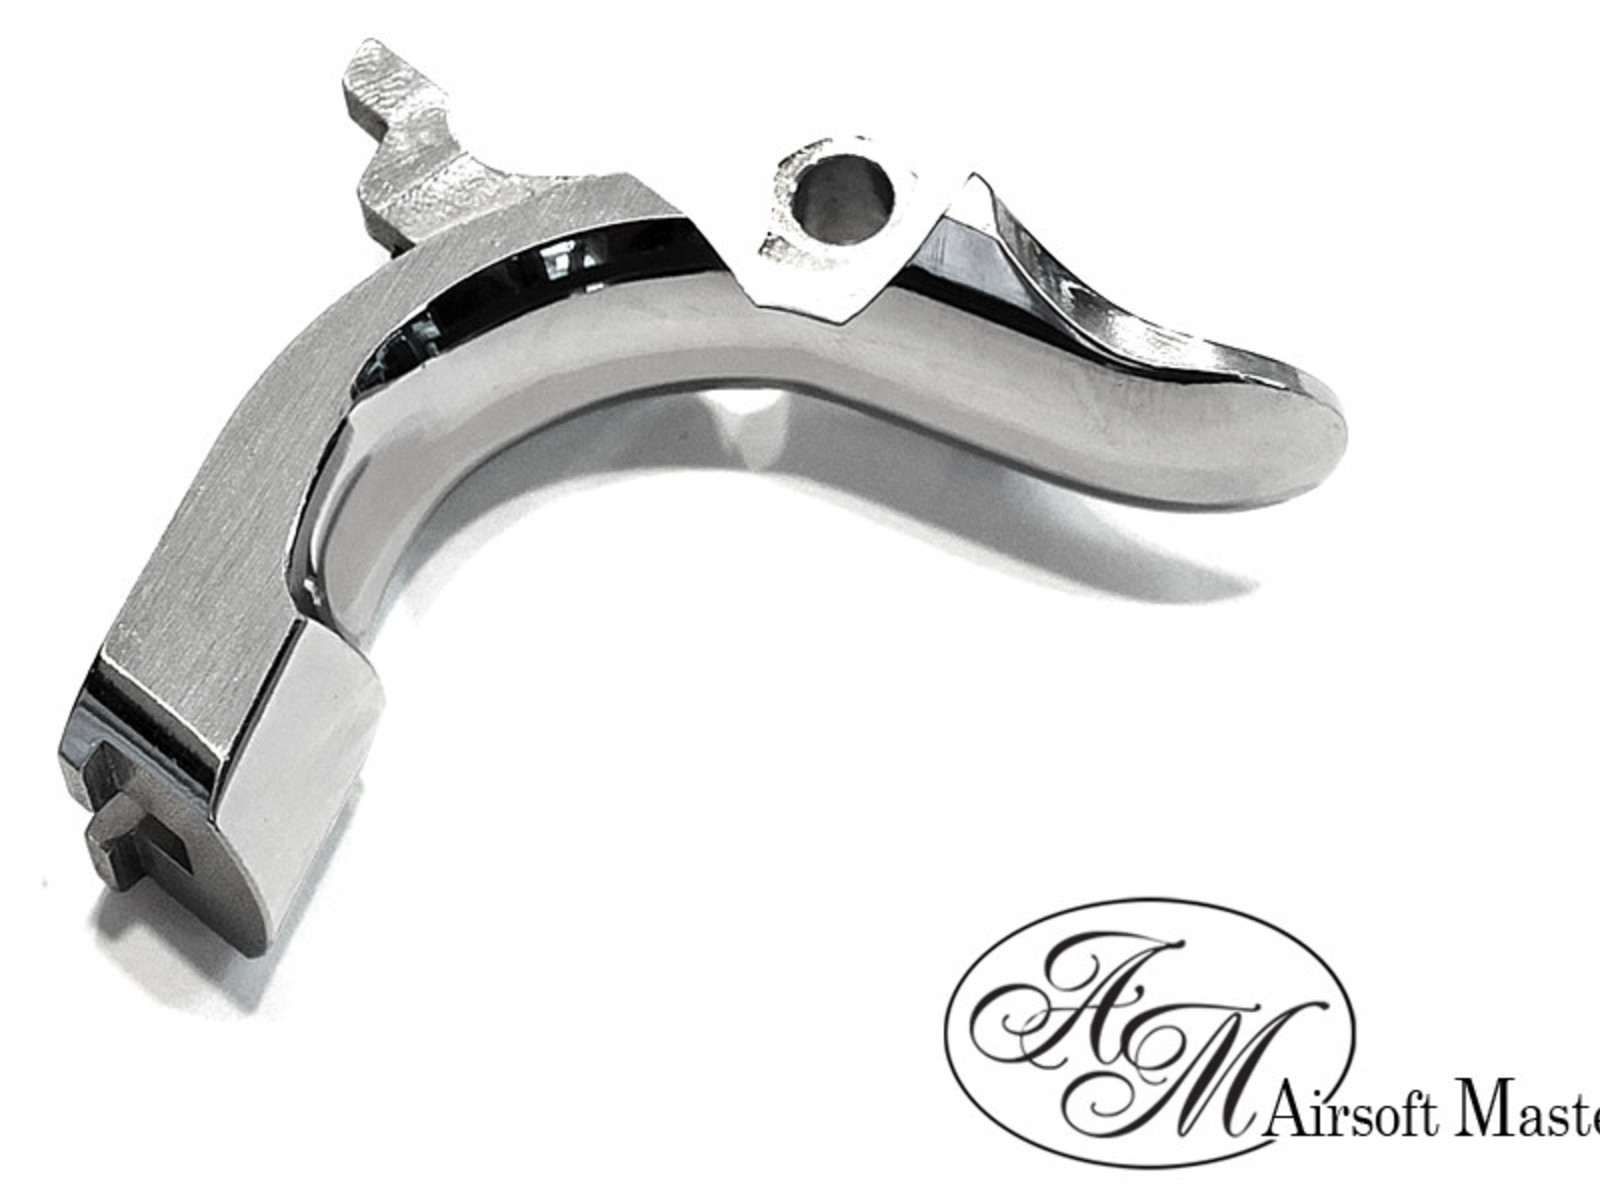 Airsoft Masterpiece Airsoft Masterpiece Steel Grip Safety - S Style